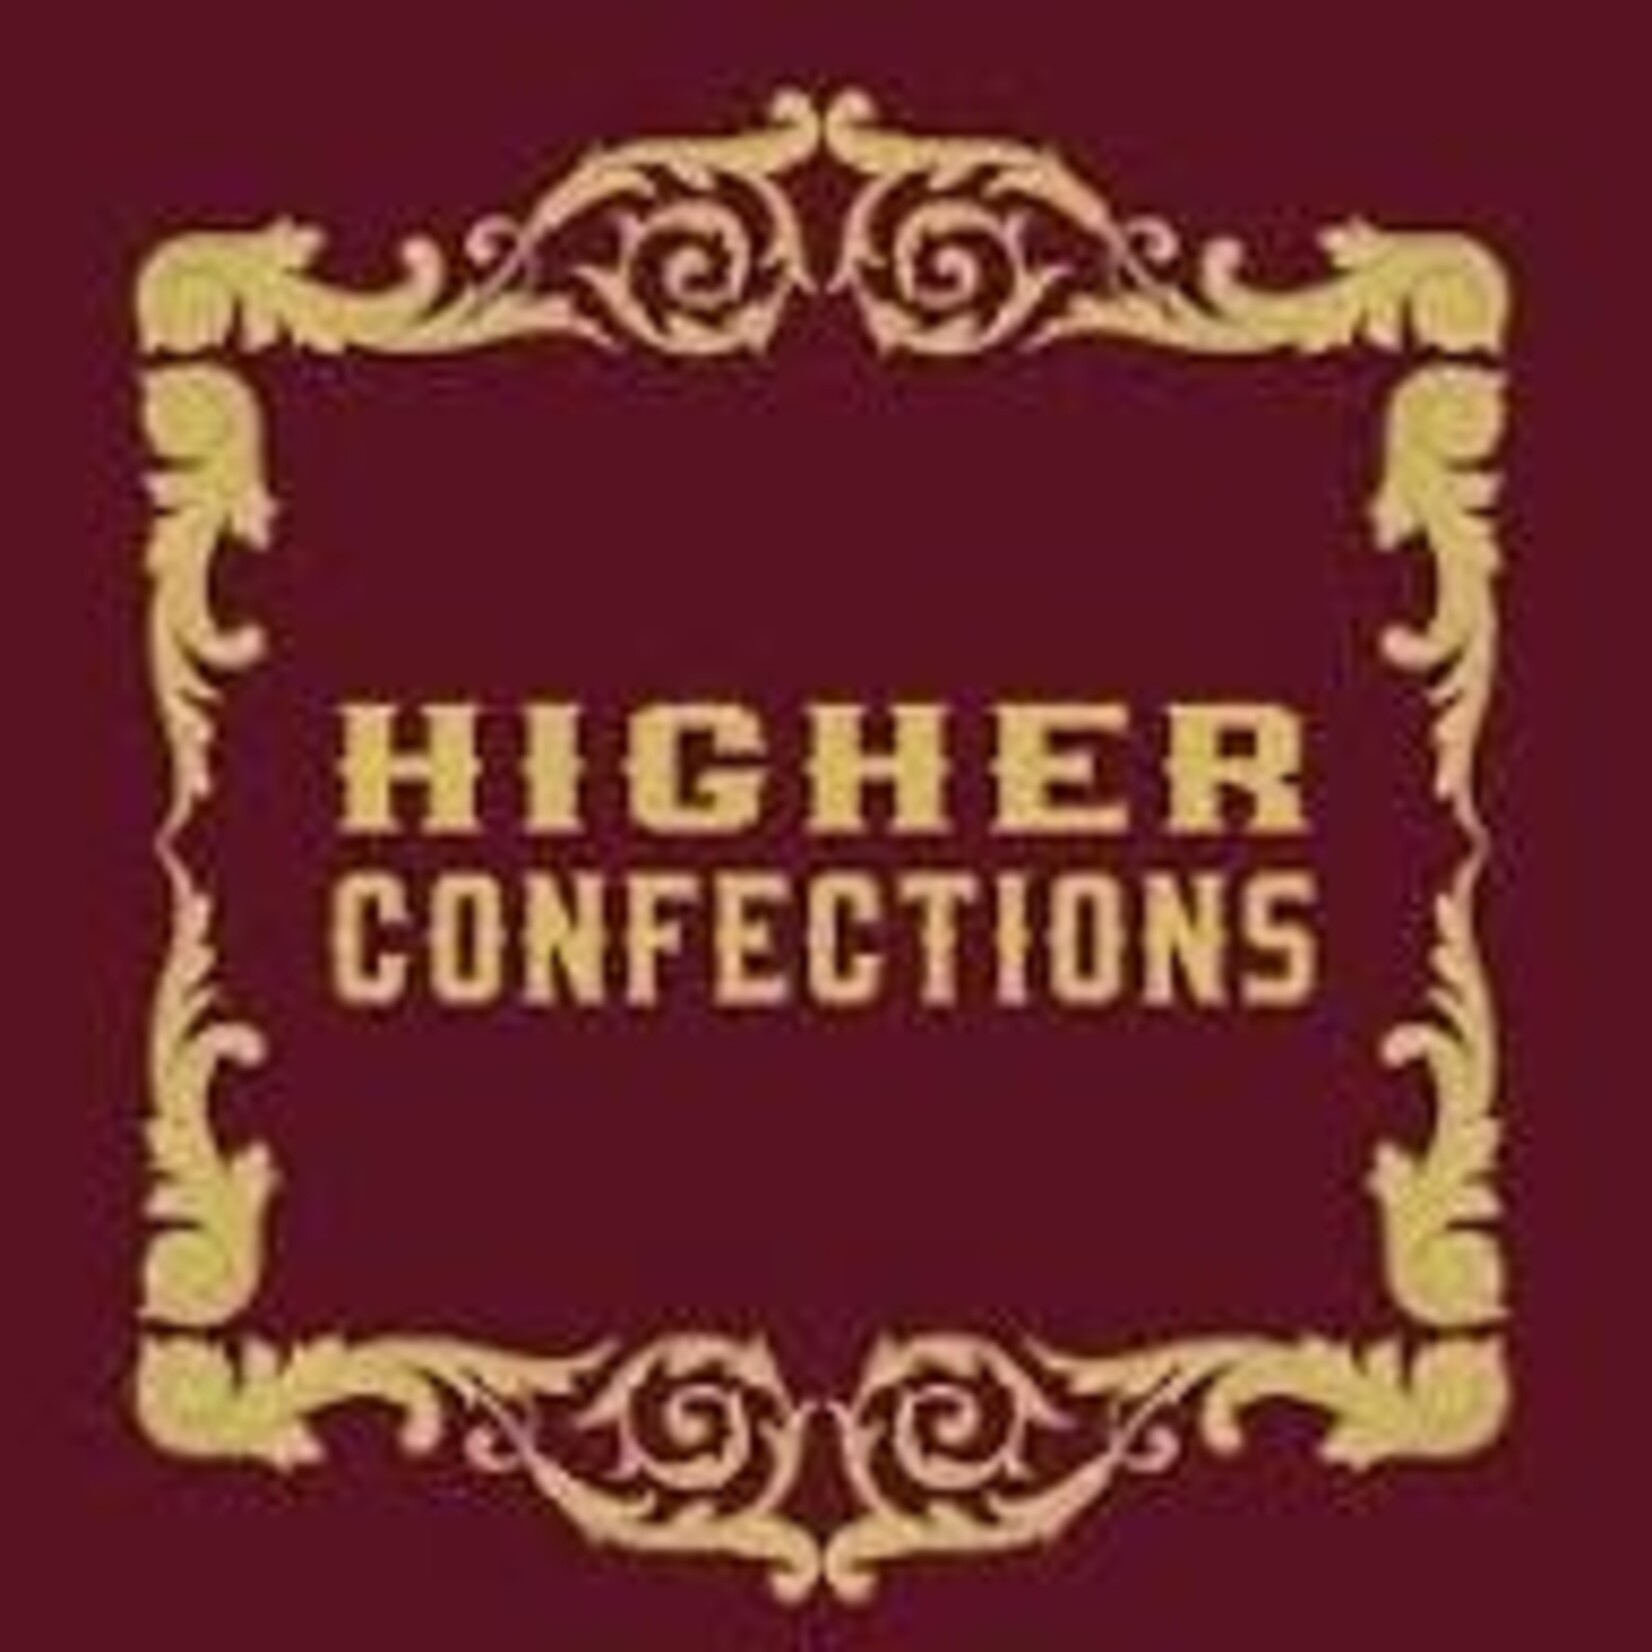 Higher Confections / Sea salt caramel